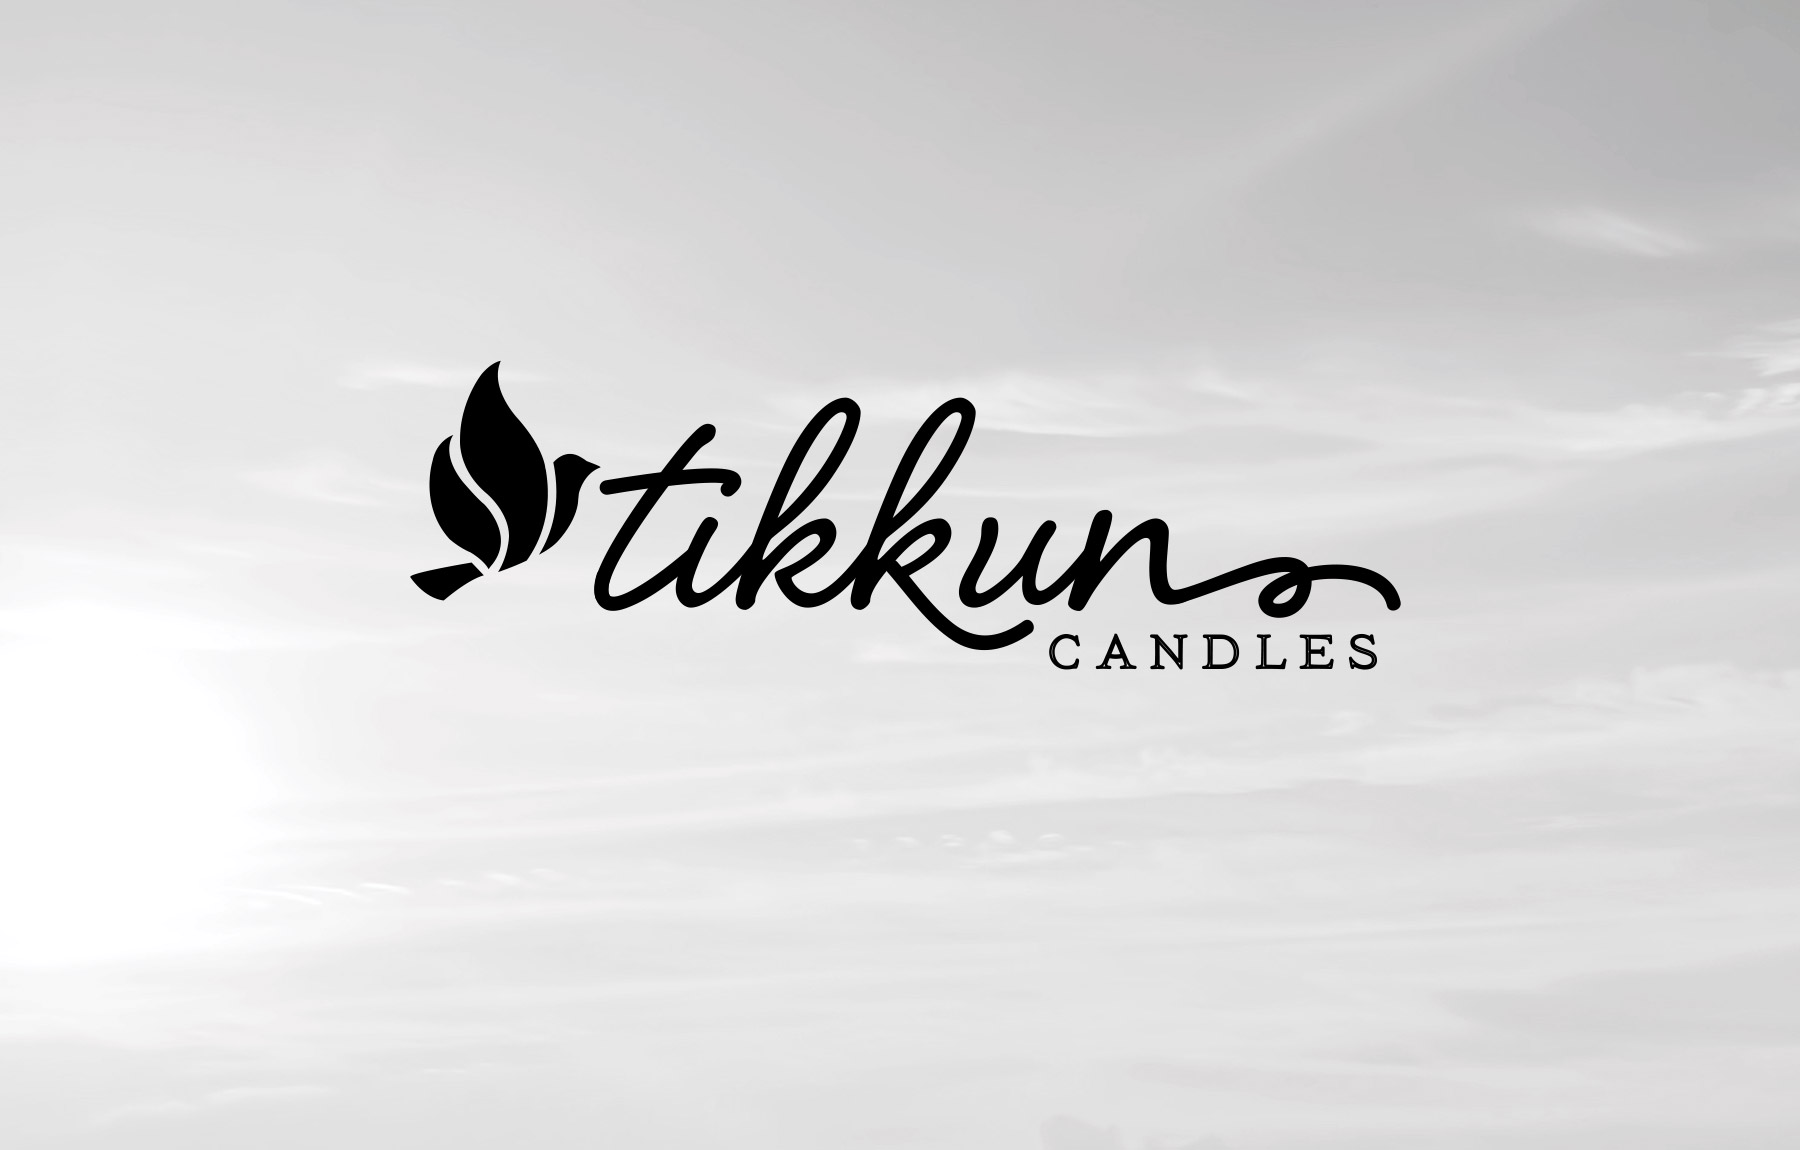 Calming candle company logo design